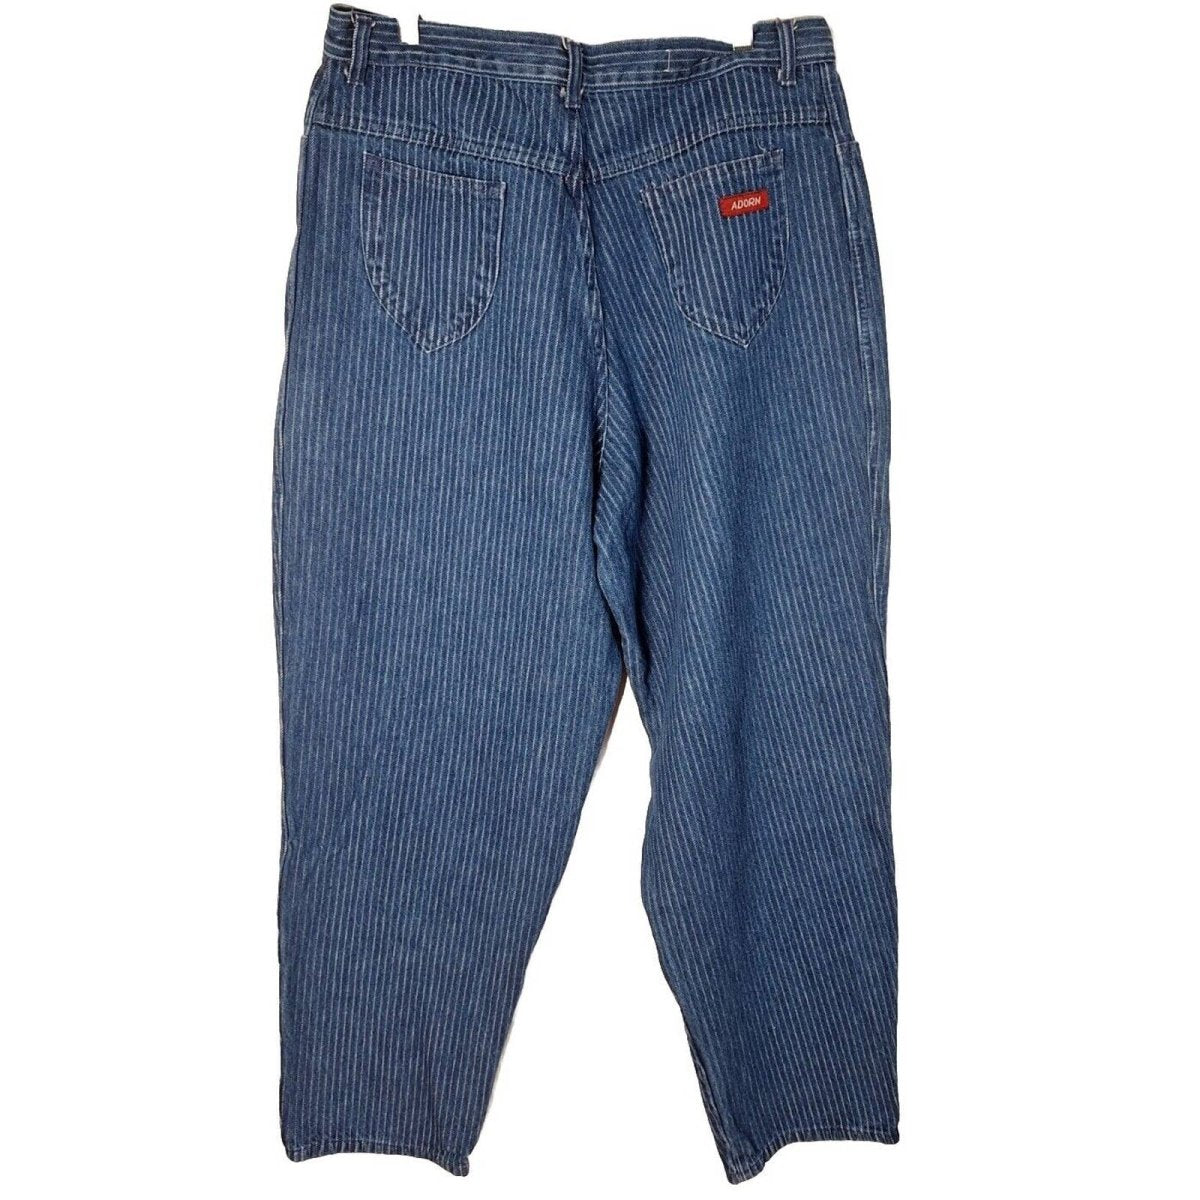 Vintage 80s All Cotton Dark Wash Railroad Stripe Jeans Unisex Size 36x32 - themallvintage The Mall Vintage